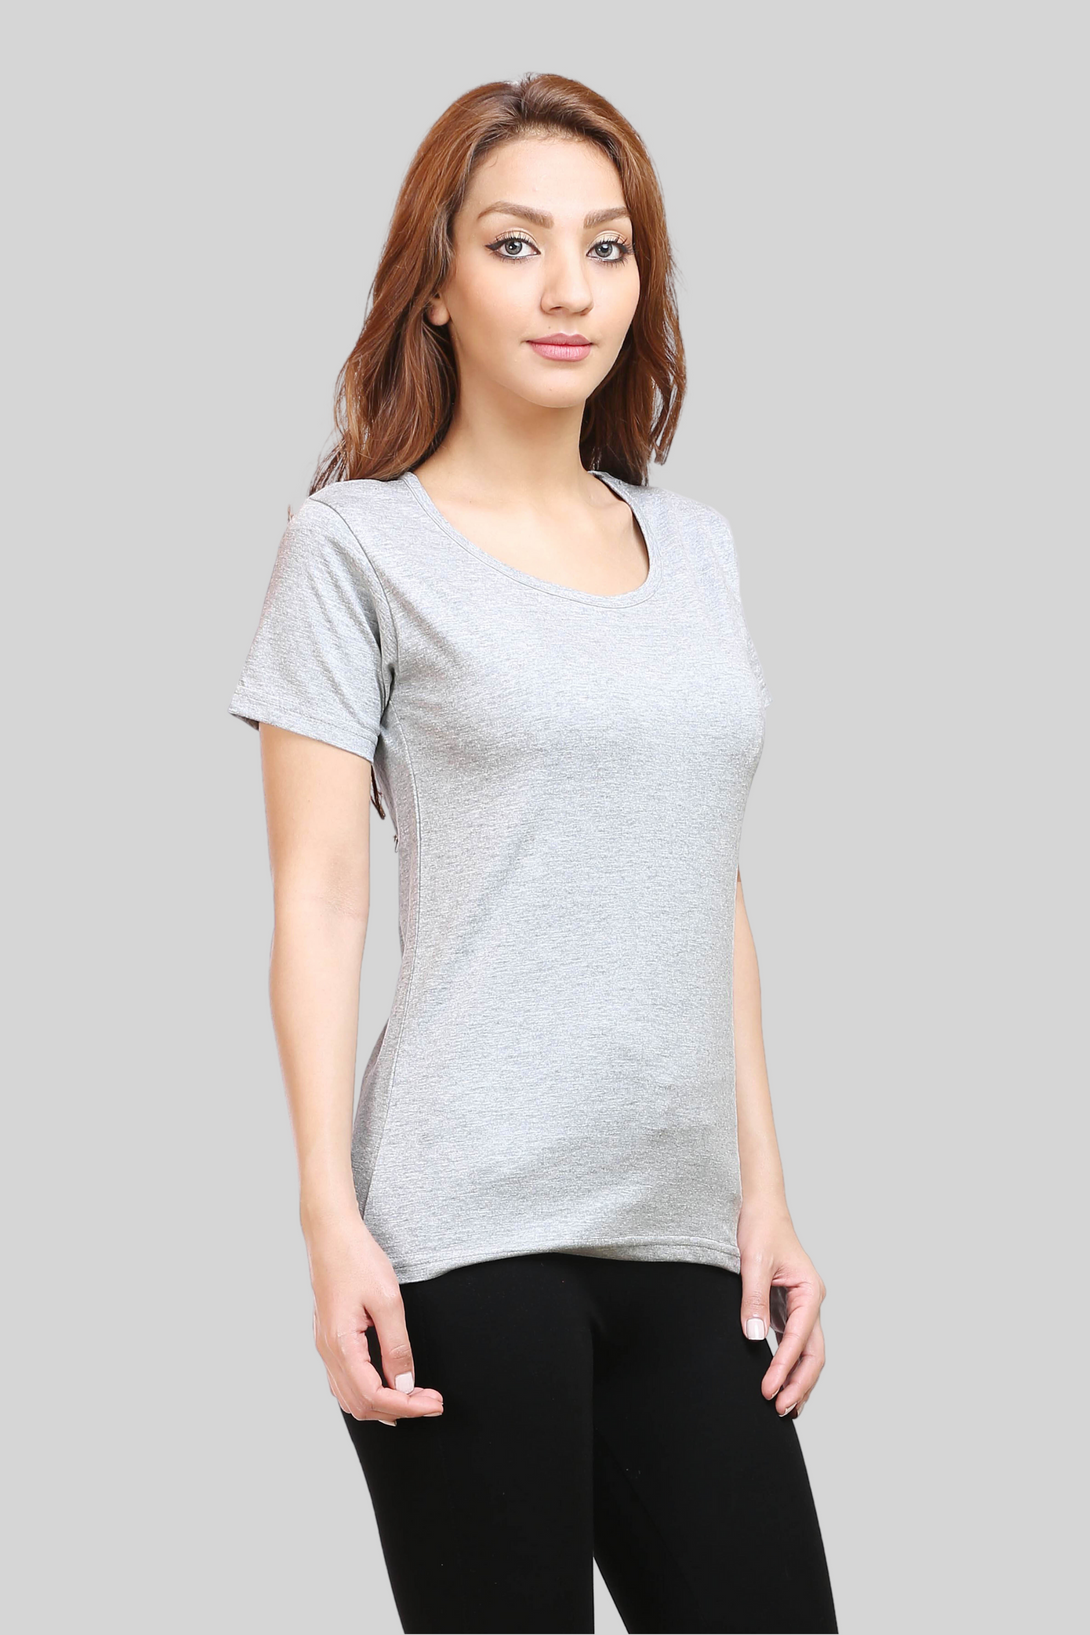 Grey Melange Scoop Neck T-Shirt For Women - WowWaves - 1